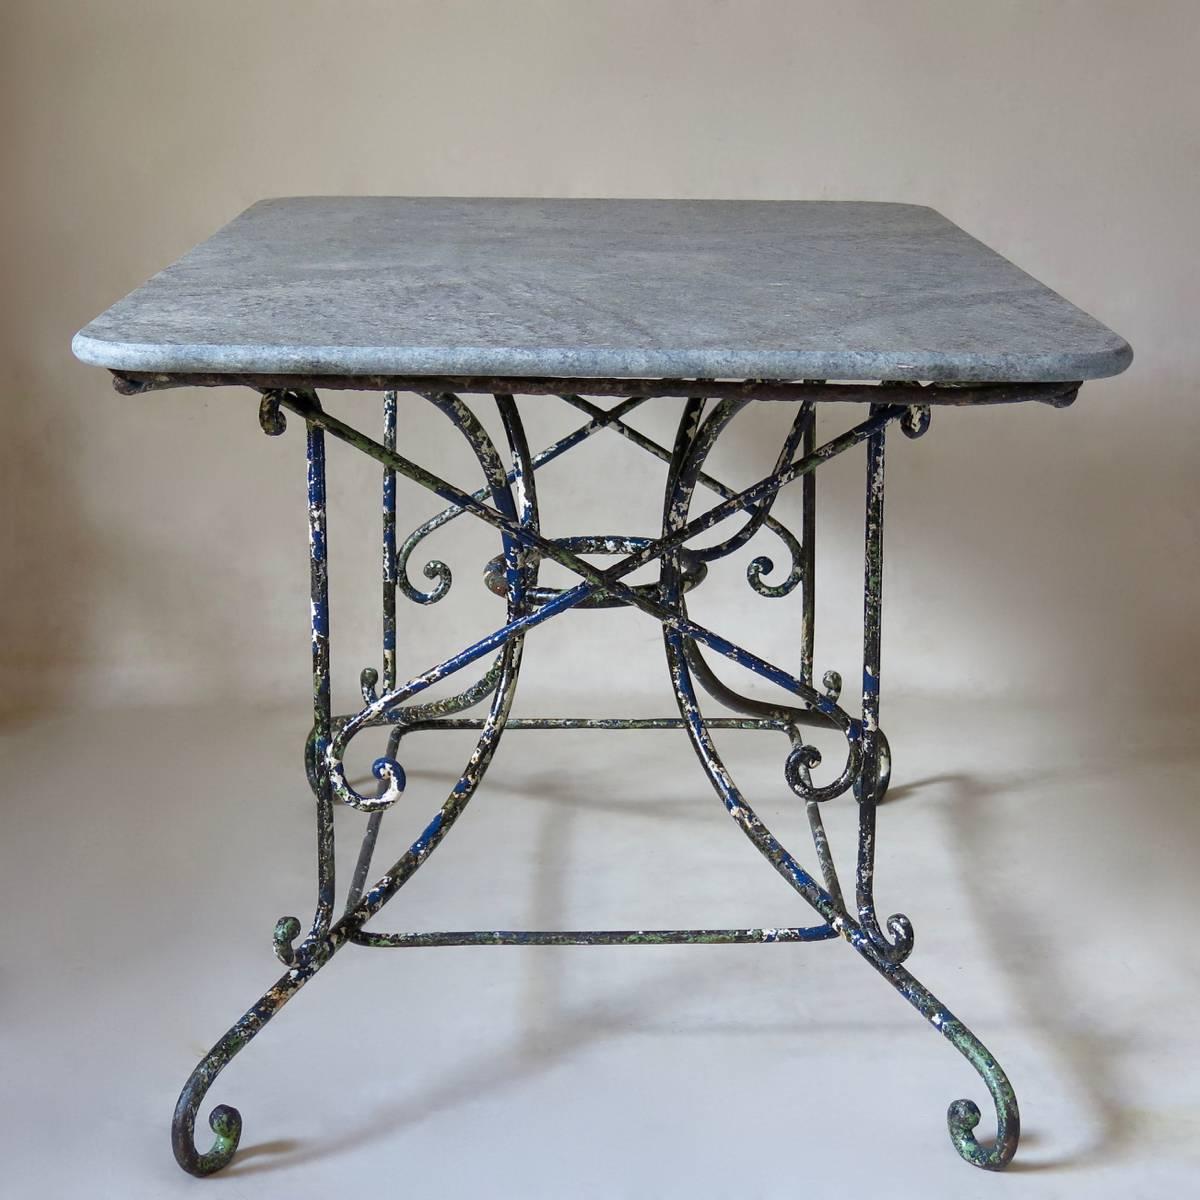 granite table for sale